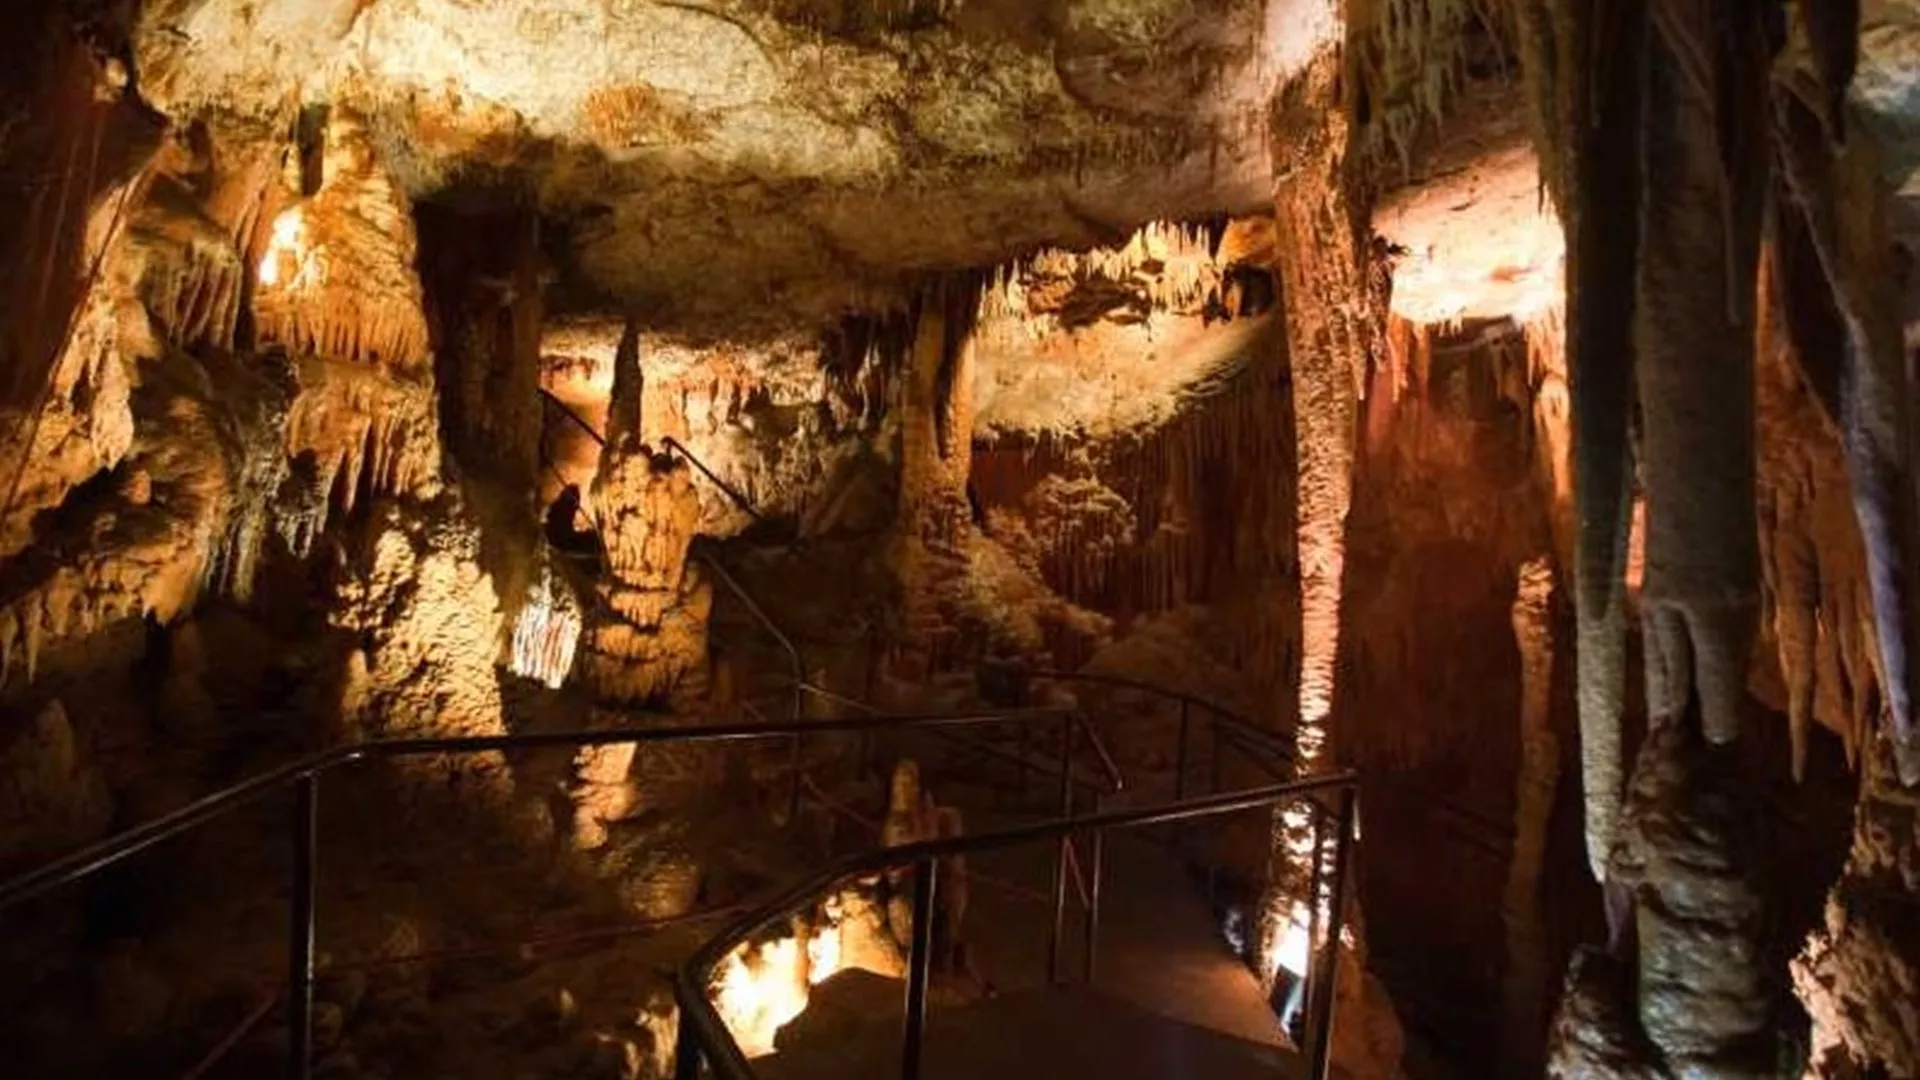 Festinsko Kraljevstvo in Croatia, Europe | Caves & Underground Places - Rated 3.7